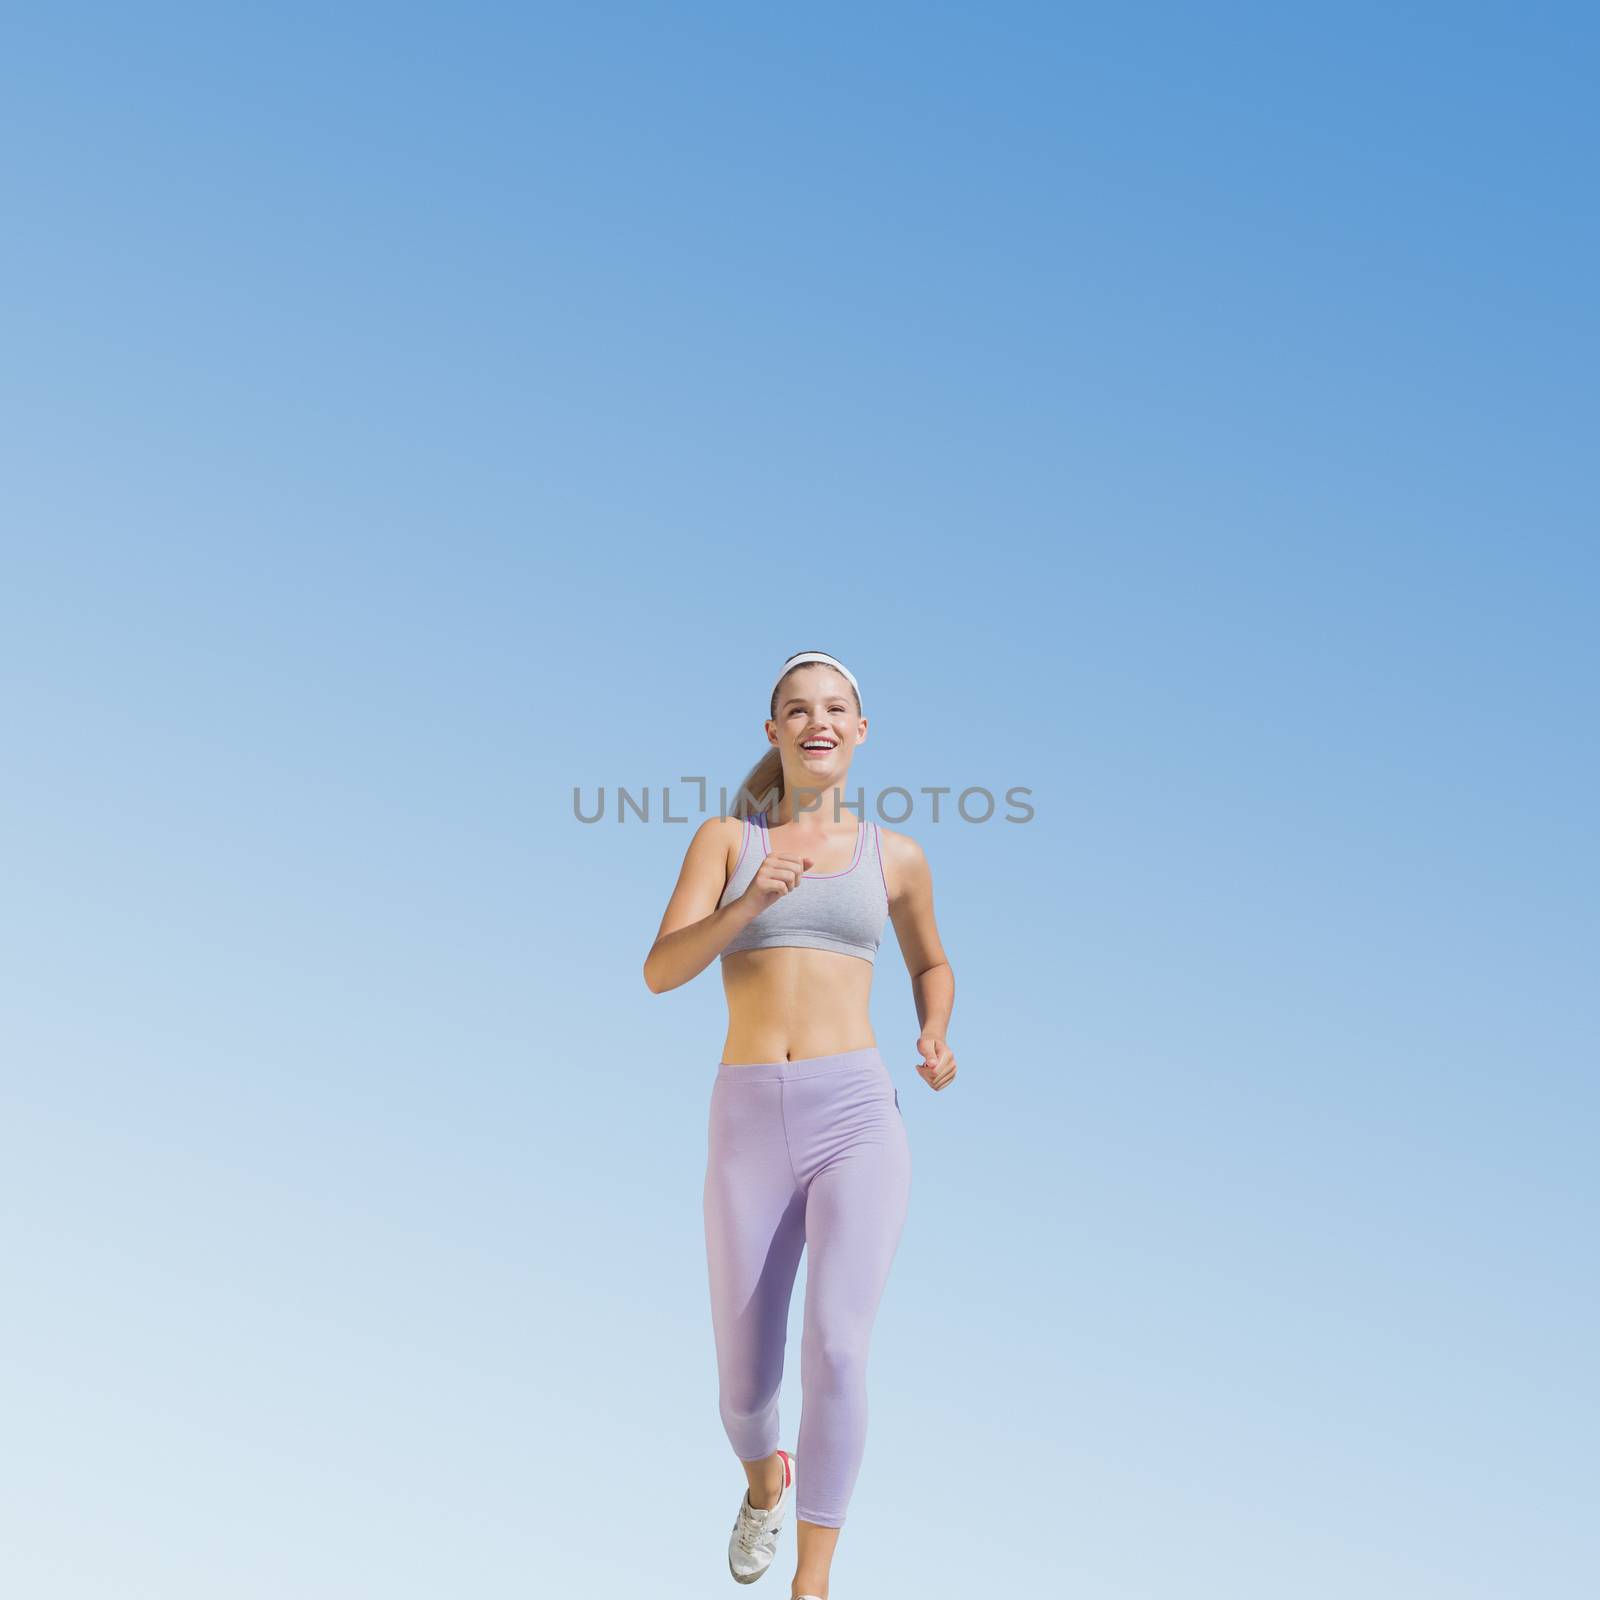 Sporty blonde jogging towards camera against blue sky